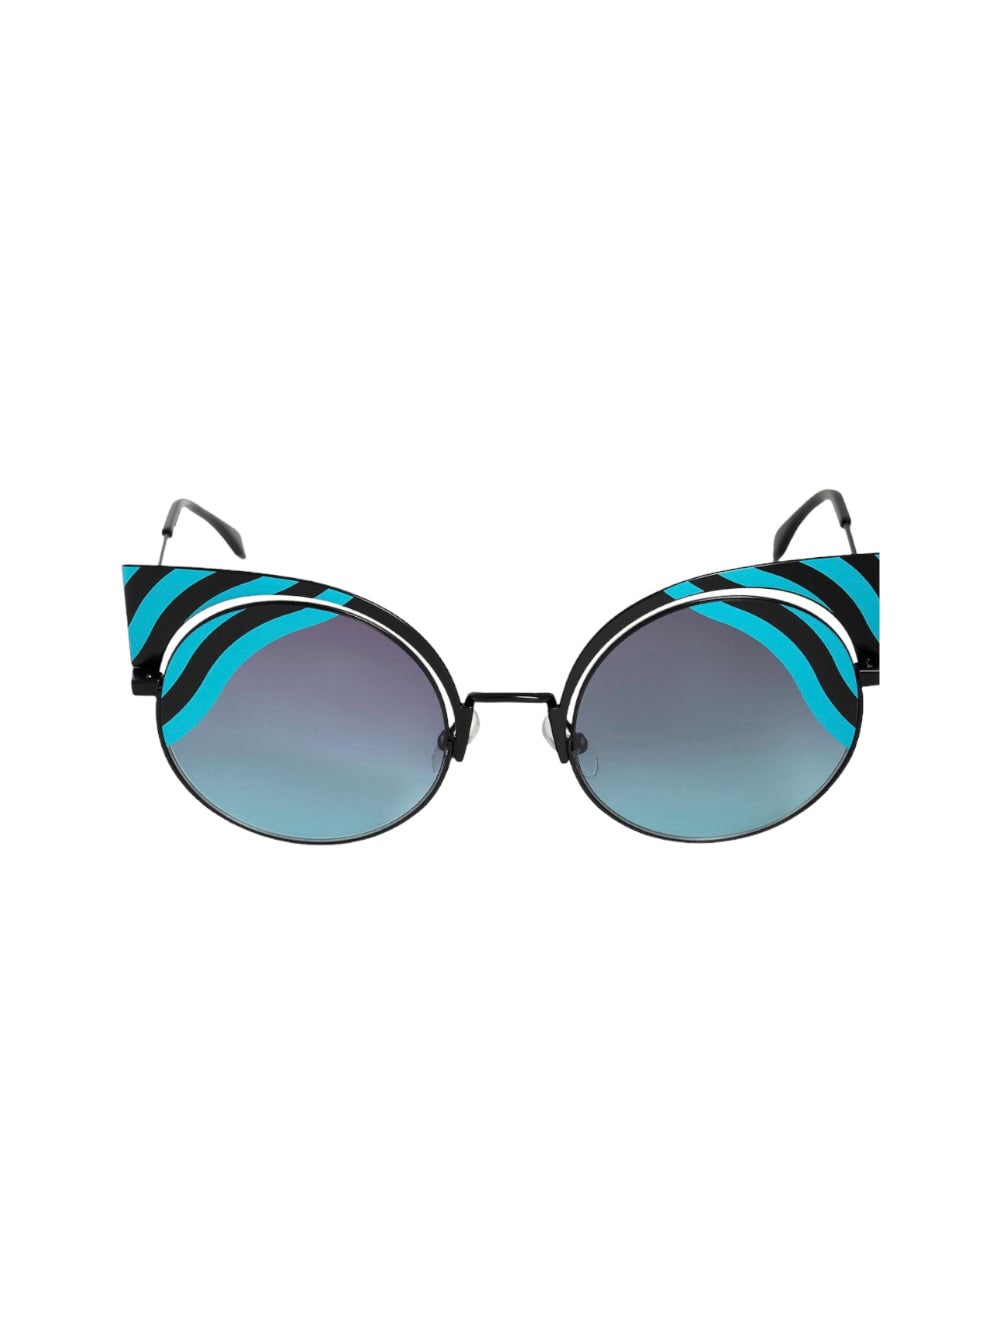 Shop Fendi Ff 0215 - Blue & Light Blue Sunglasses